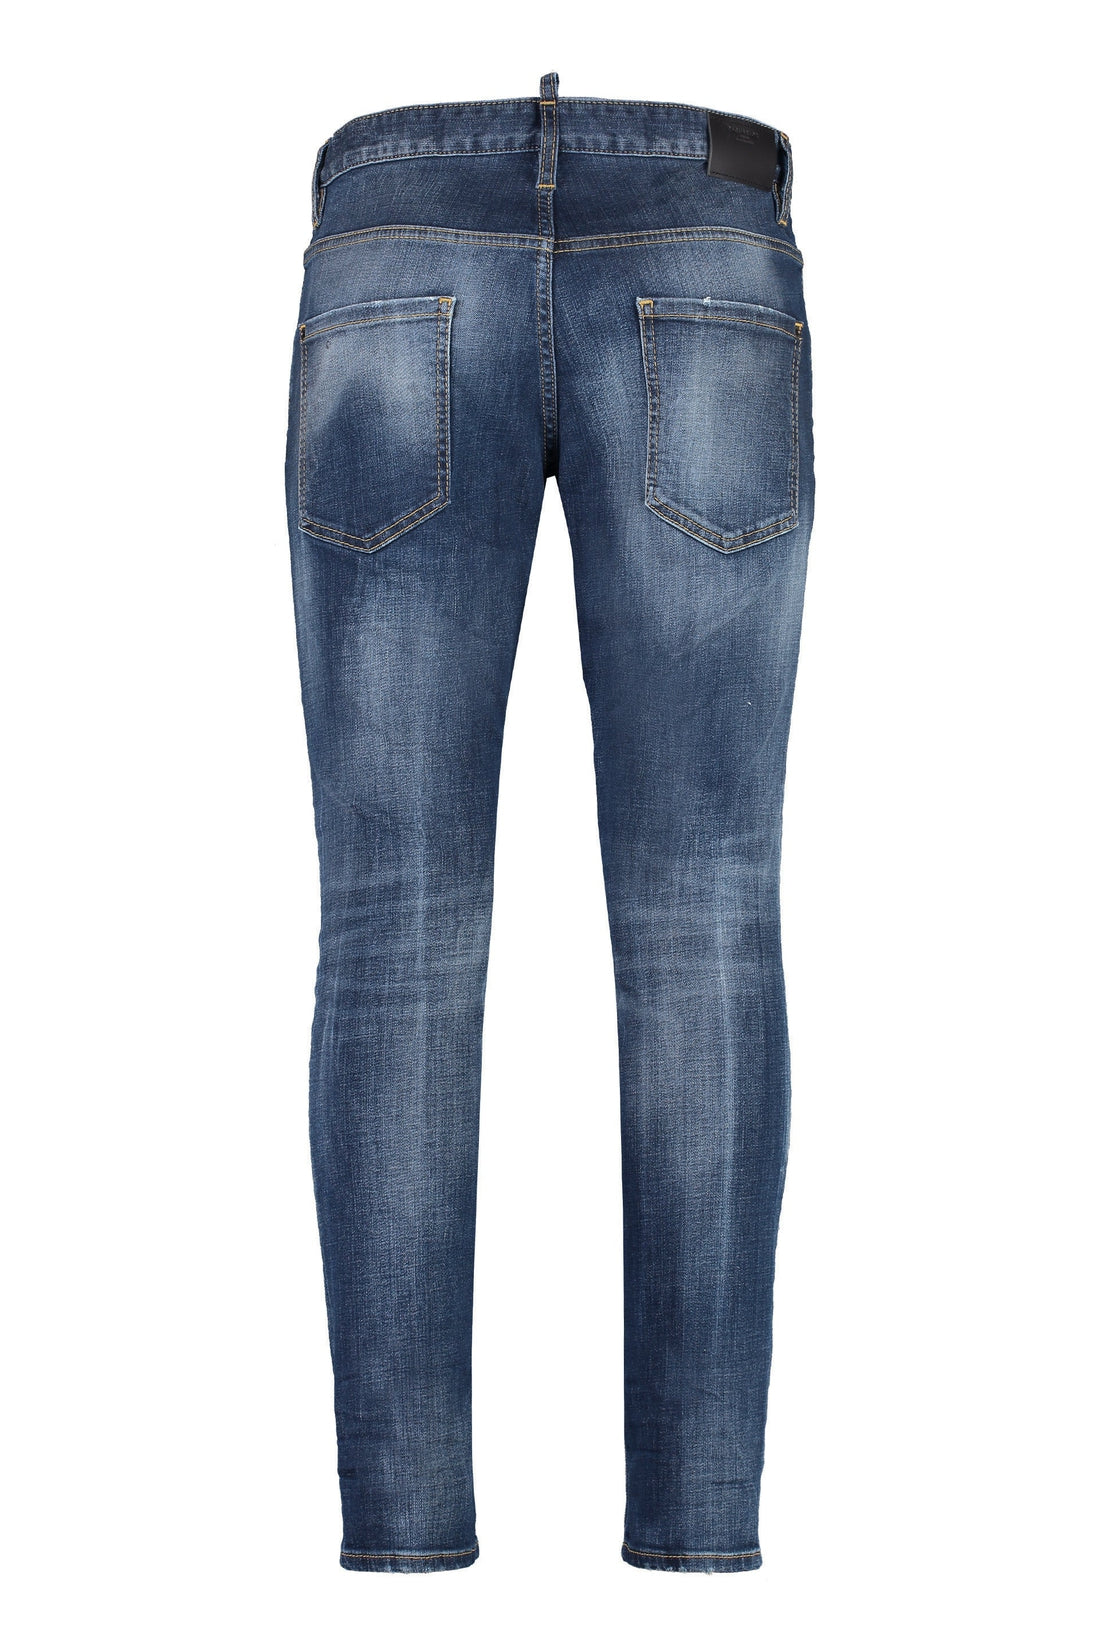 Dsquared2-OUTLET-SALE-Skater jeans-ARCHIVIST